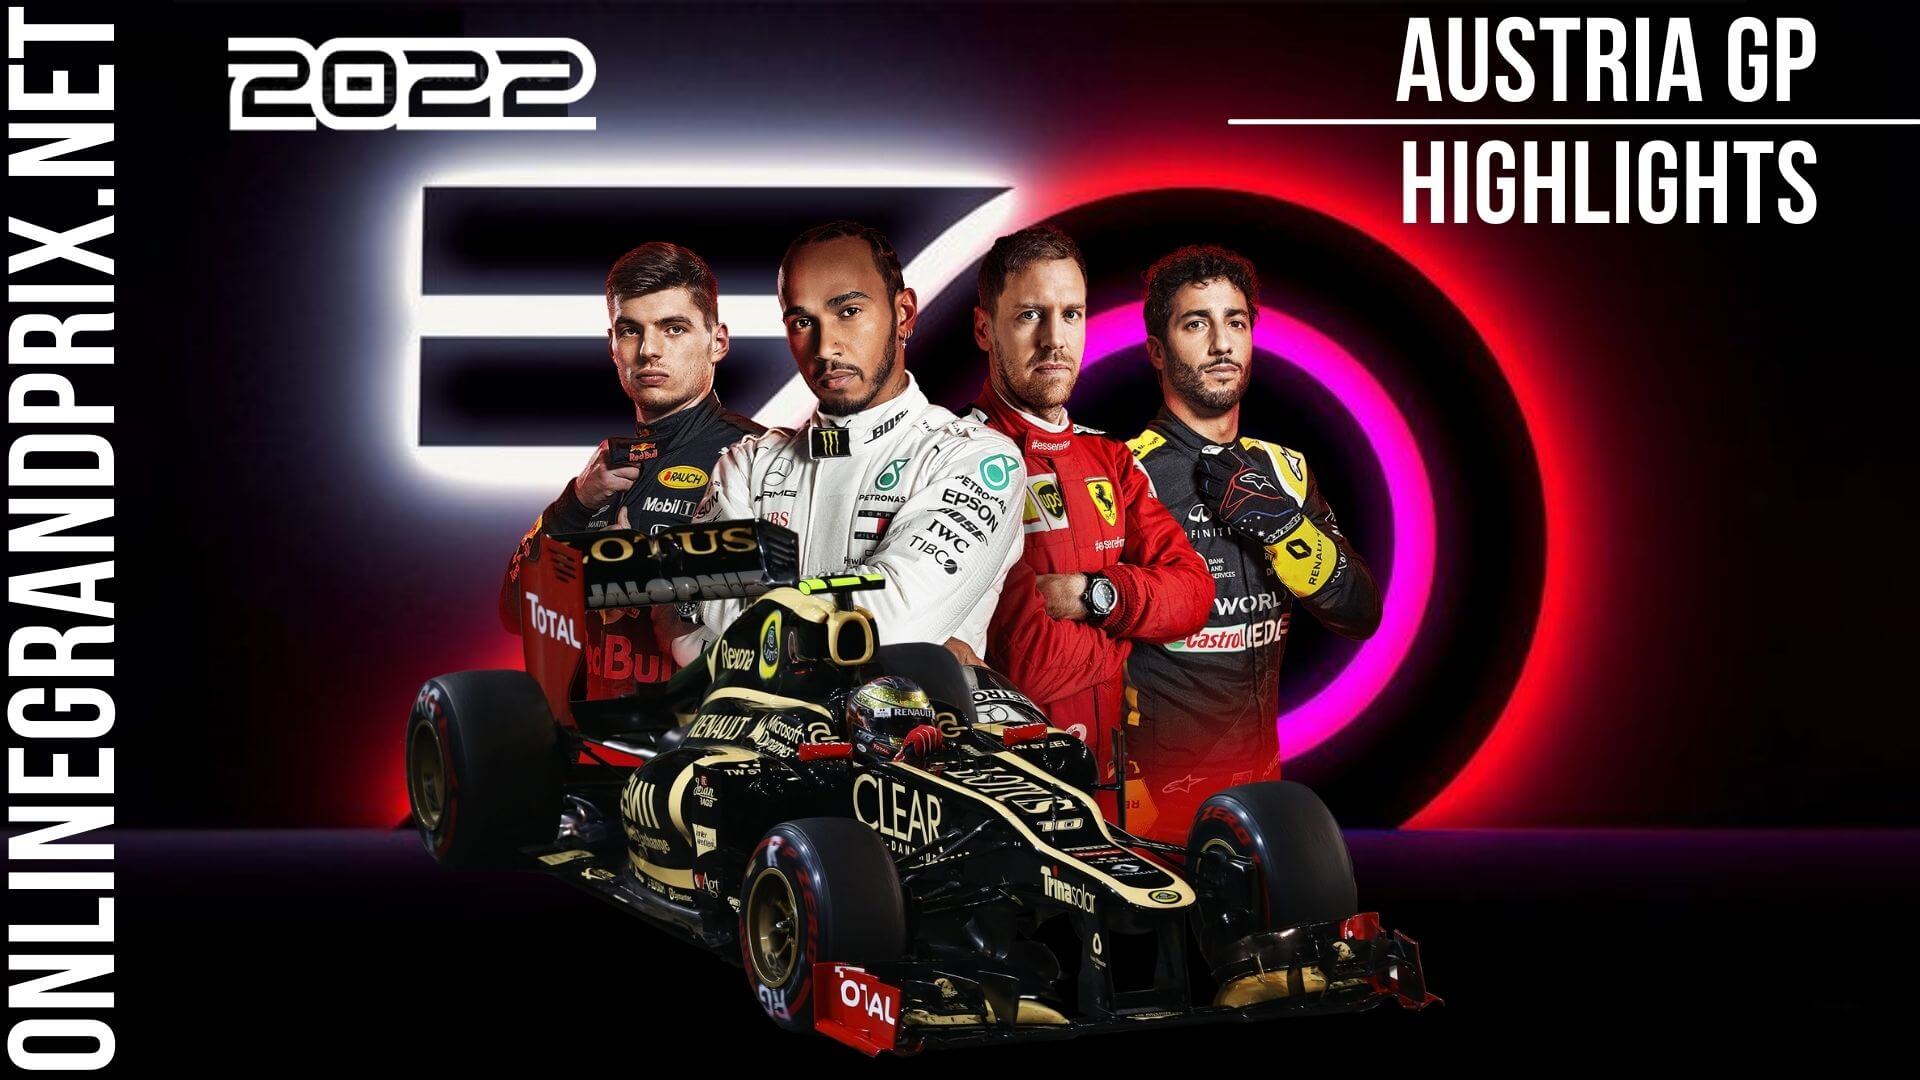 Austria GP F1 Highlights 2022